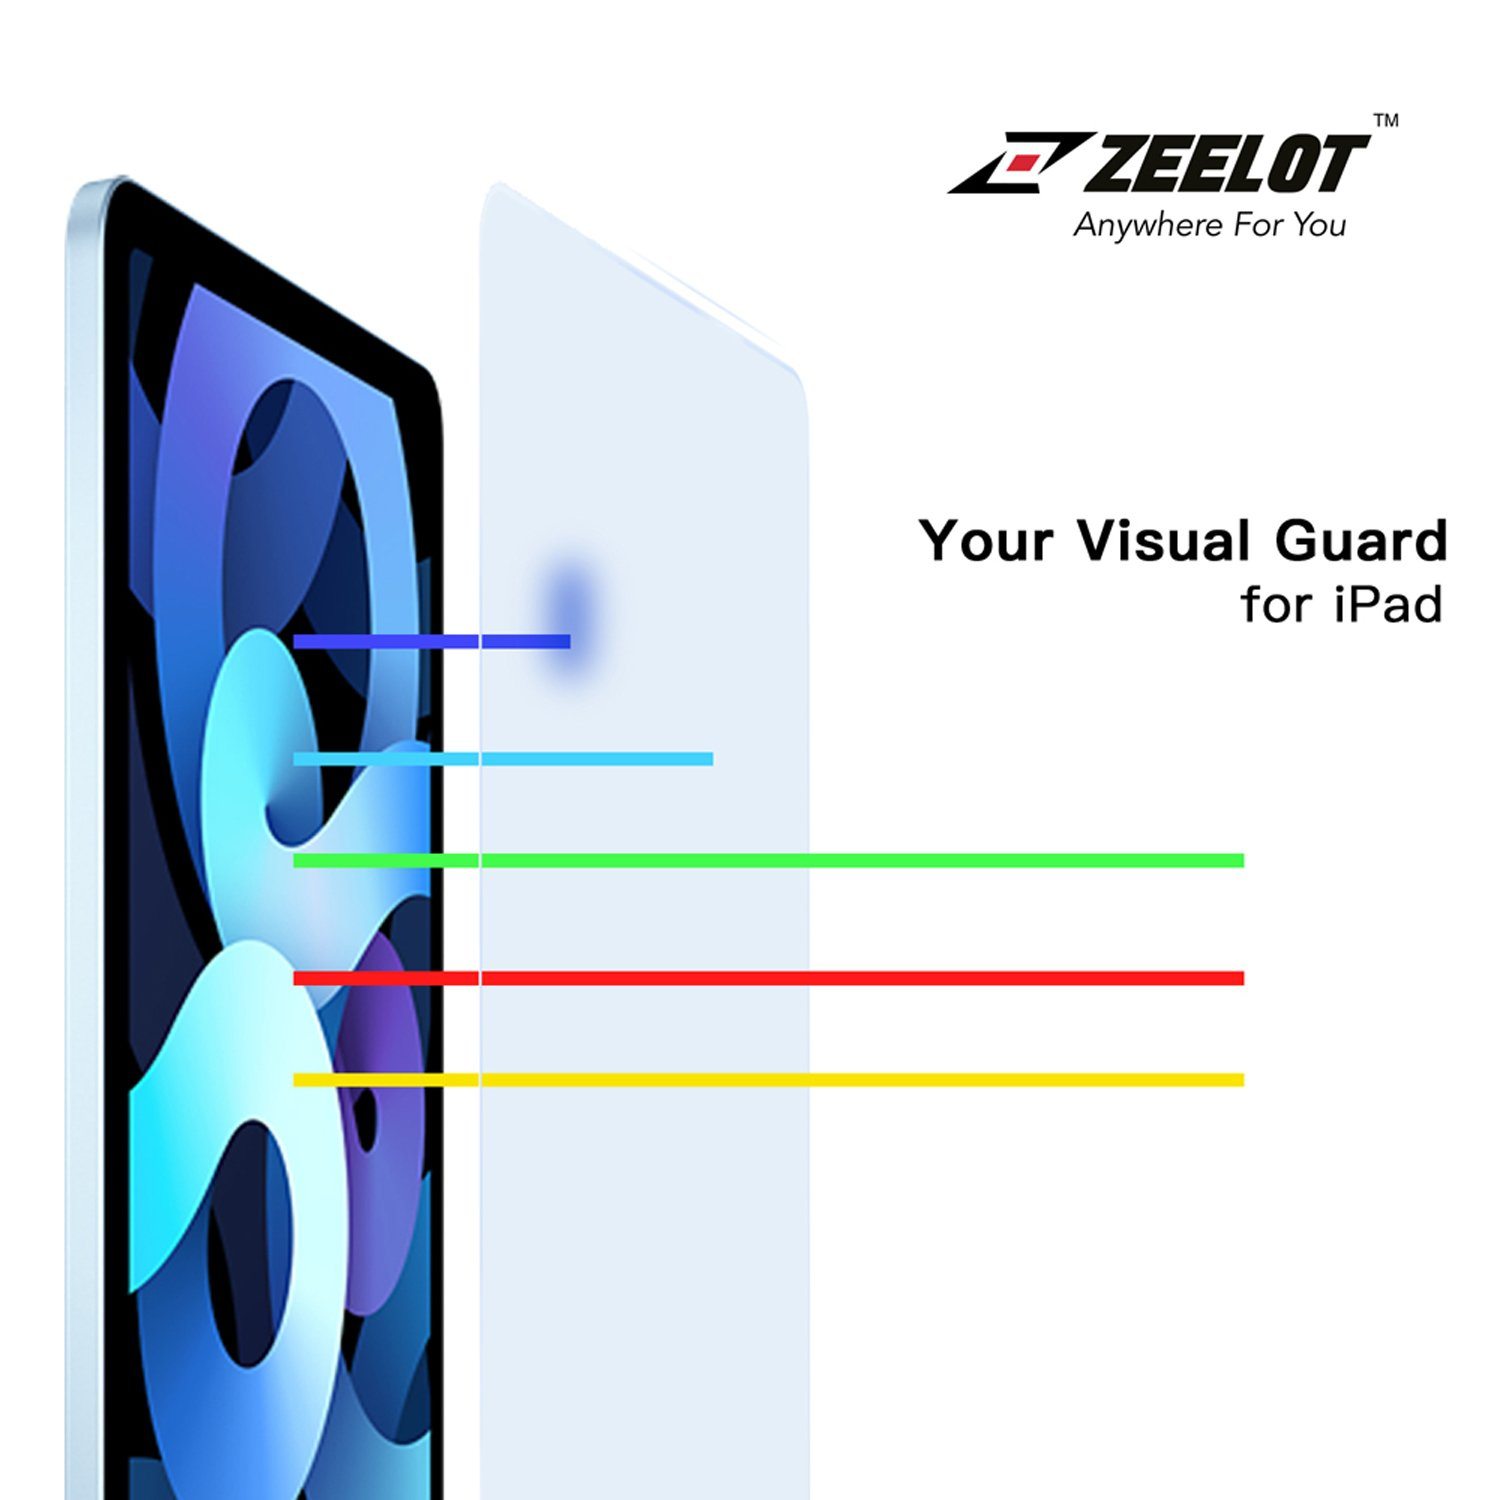 ZEELOT PureGlass 2.5D Tempered Glass Screen Protector for iPad Air/Pro 10.5" (2019/2017), Anti Blue Ray Default ZEELOT 